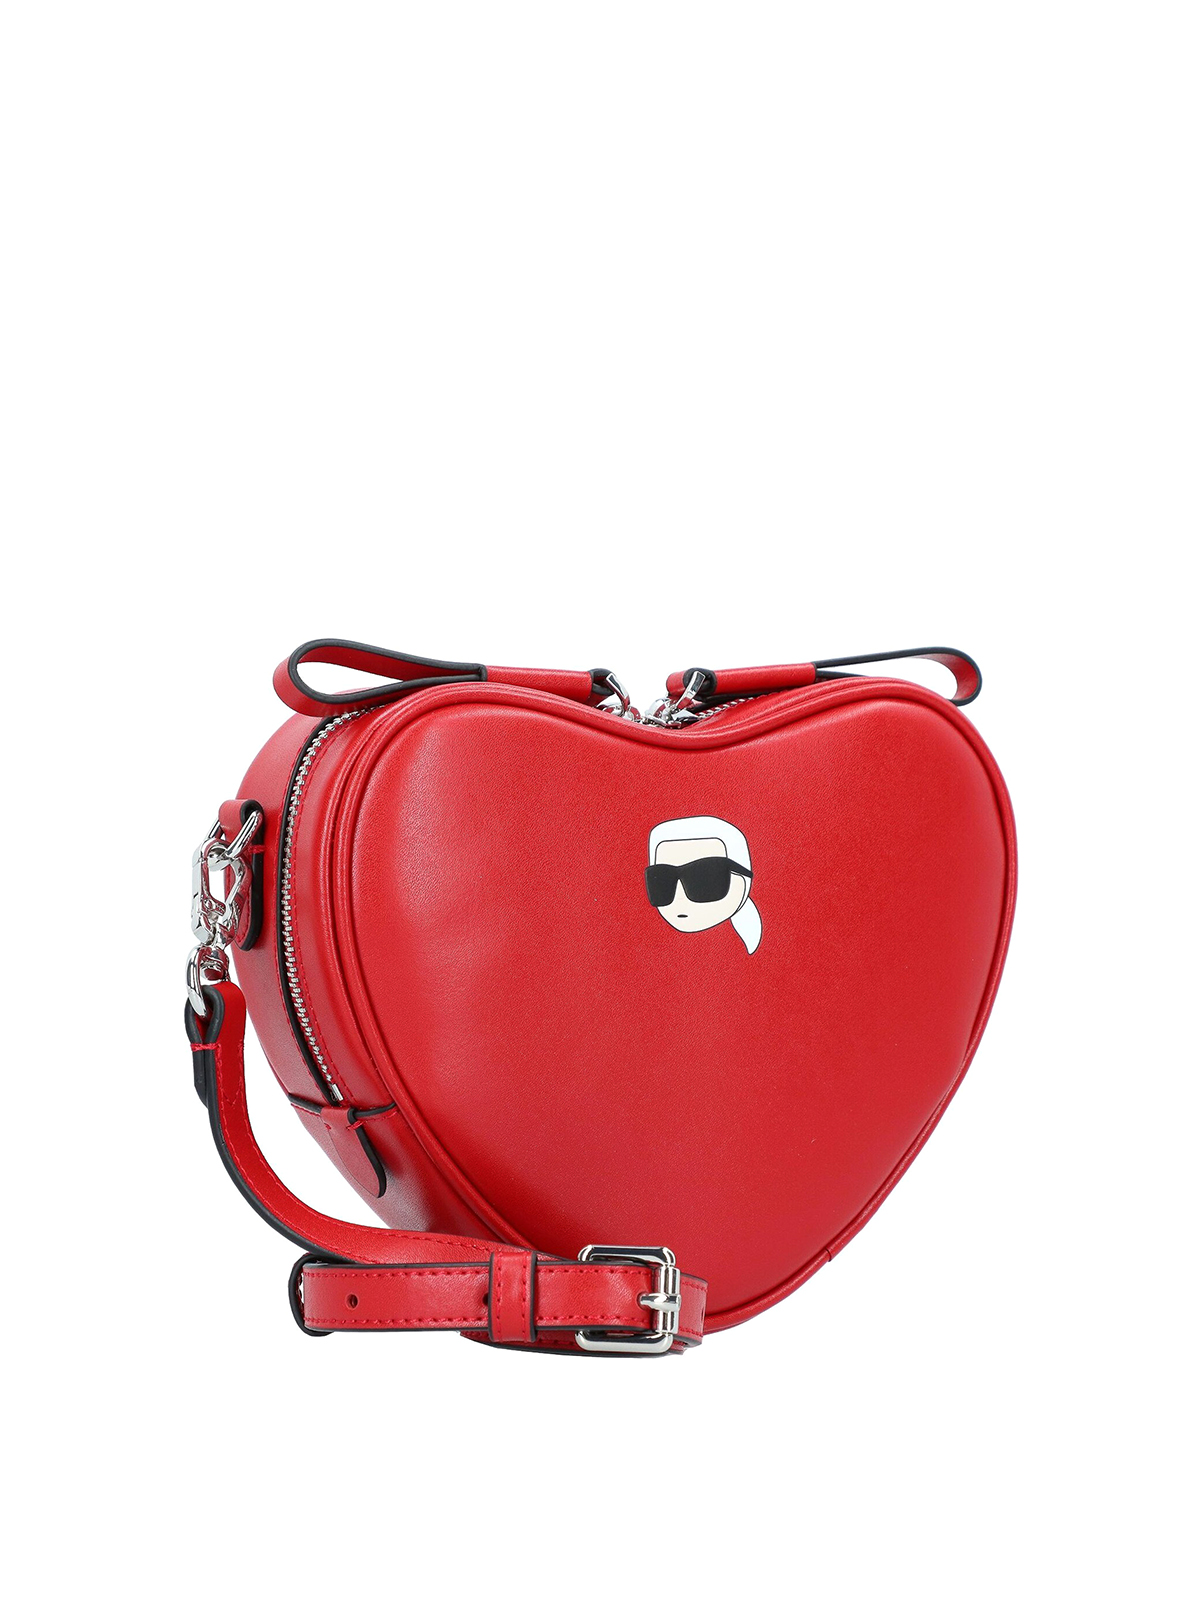 Cross body bags Karl Lagerfeld - Valentine heart bag - 230W3174500